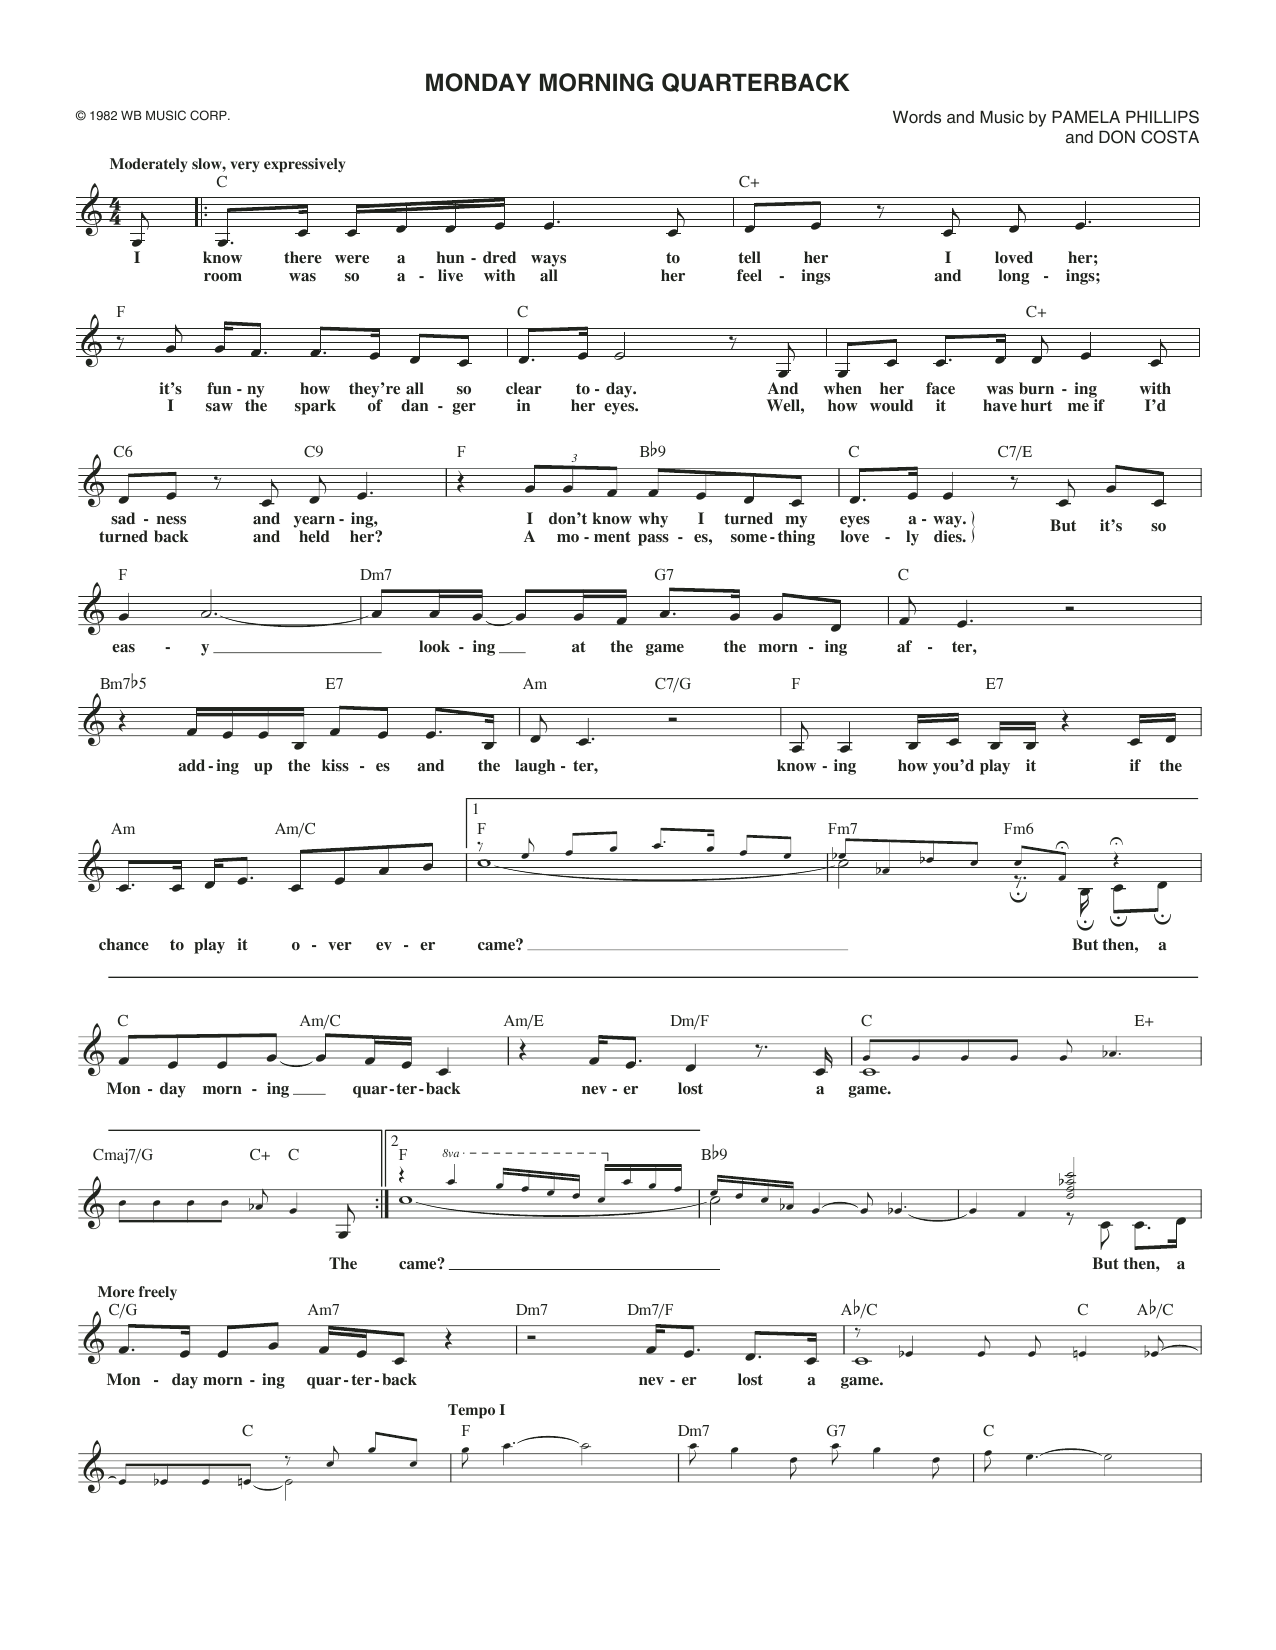 Frank Sinatra Monday Morning Quarterback Sheet Music Notes & Chords for Lead Sheet / Fake Book - Download or Print PDF